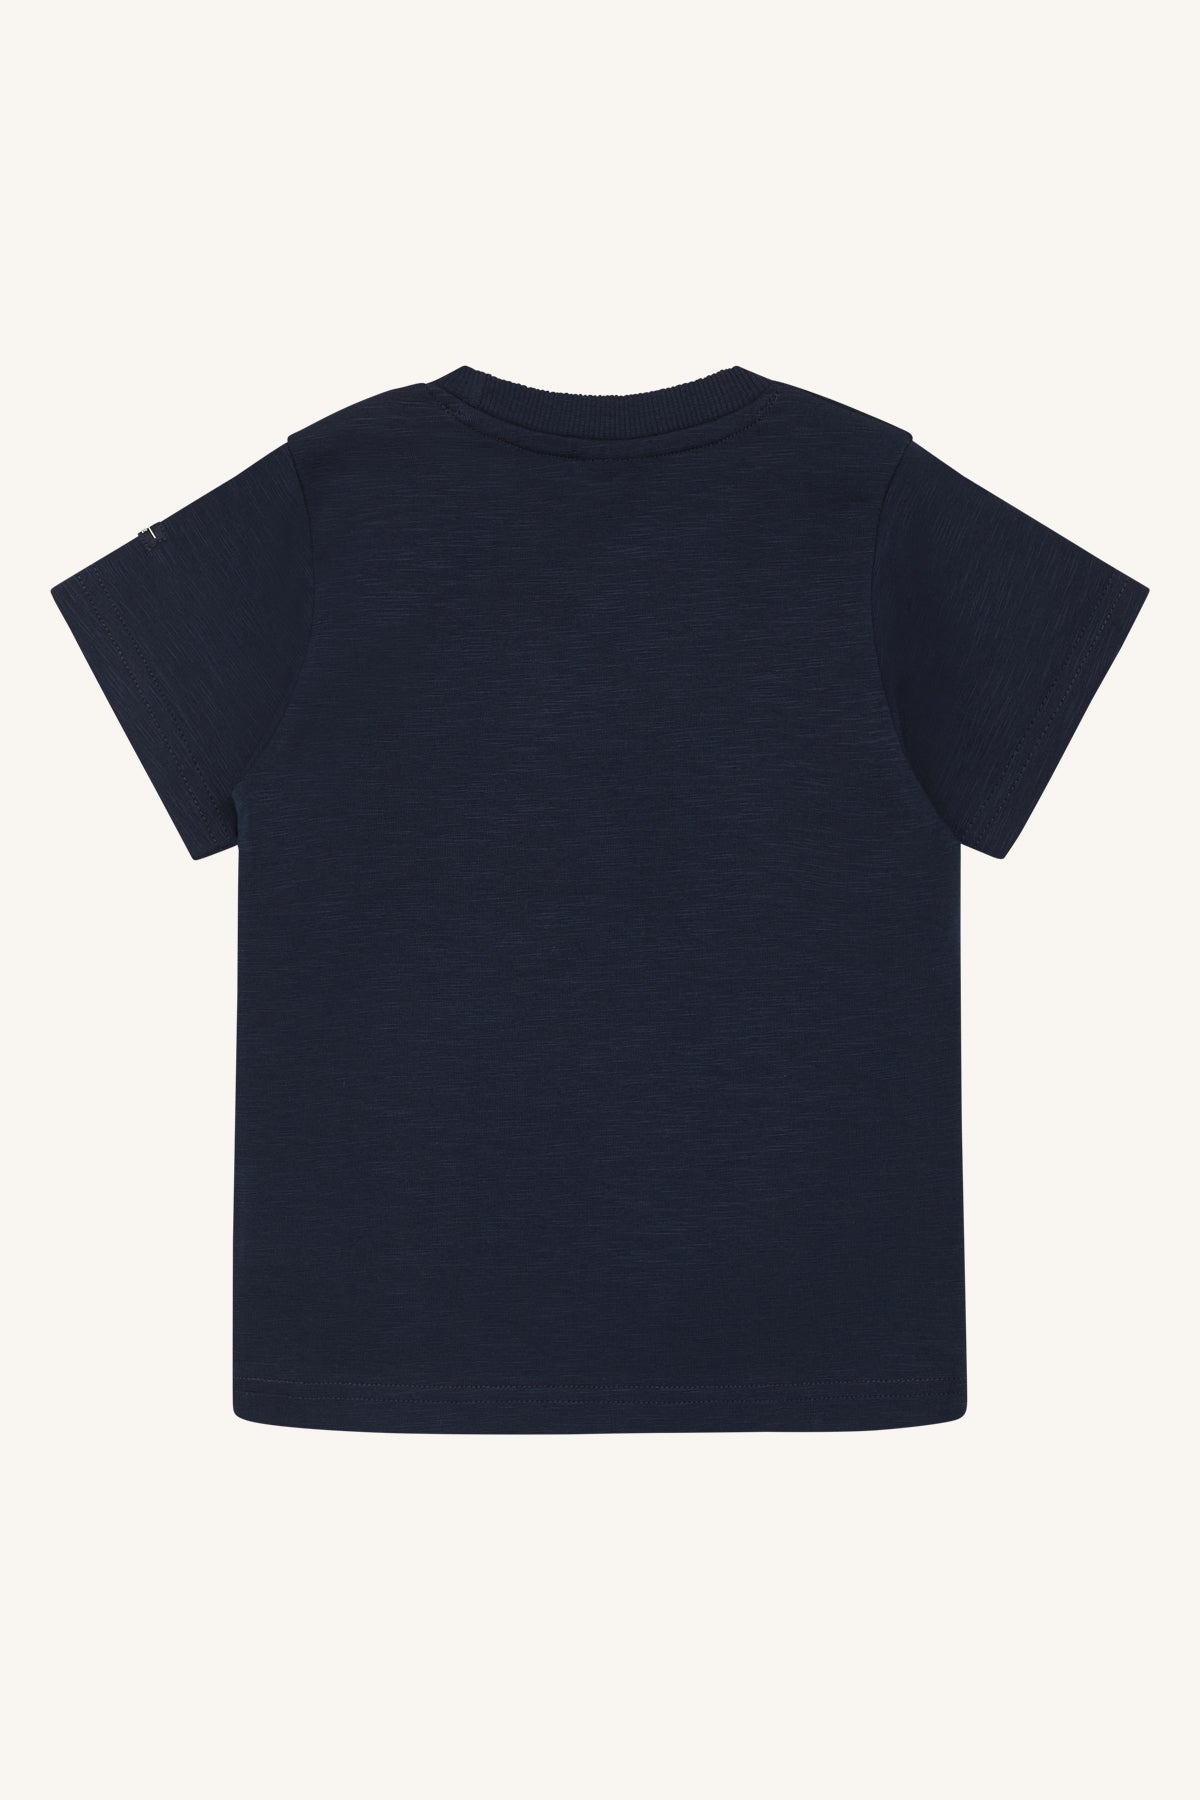 HCArthur - T-shirt